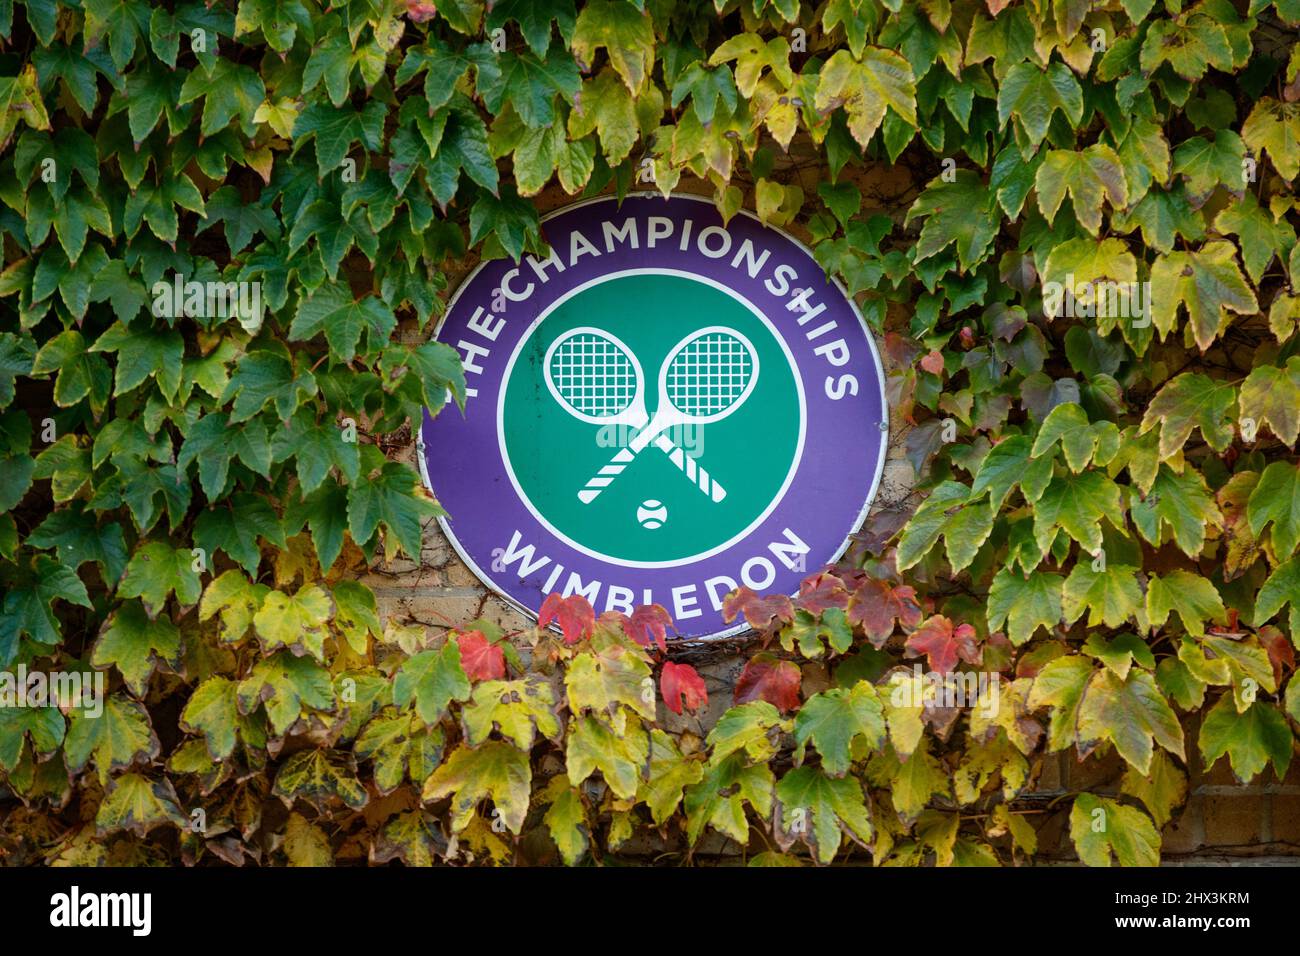 The Championships logo at Wimbledon Stock Photo